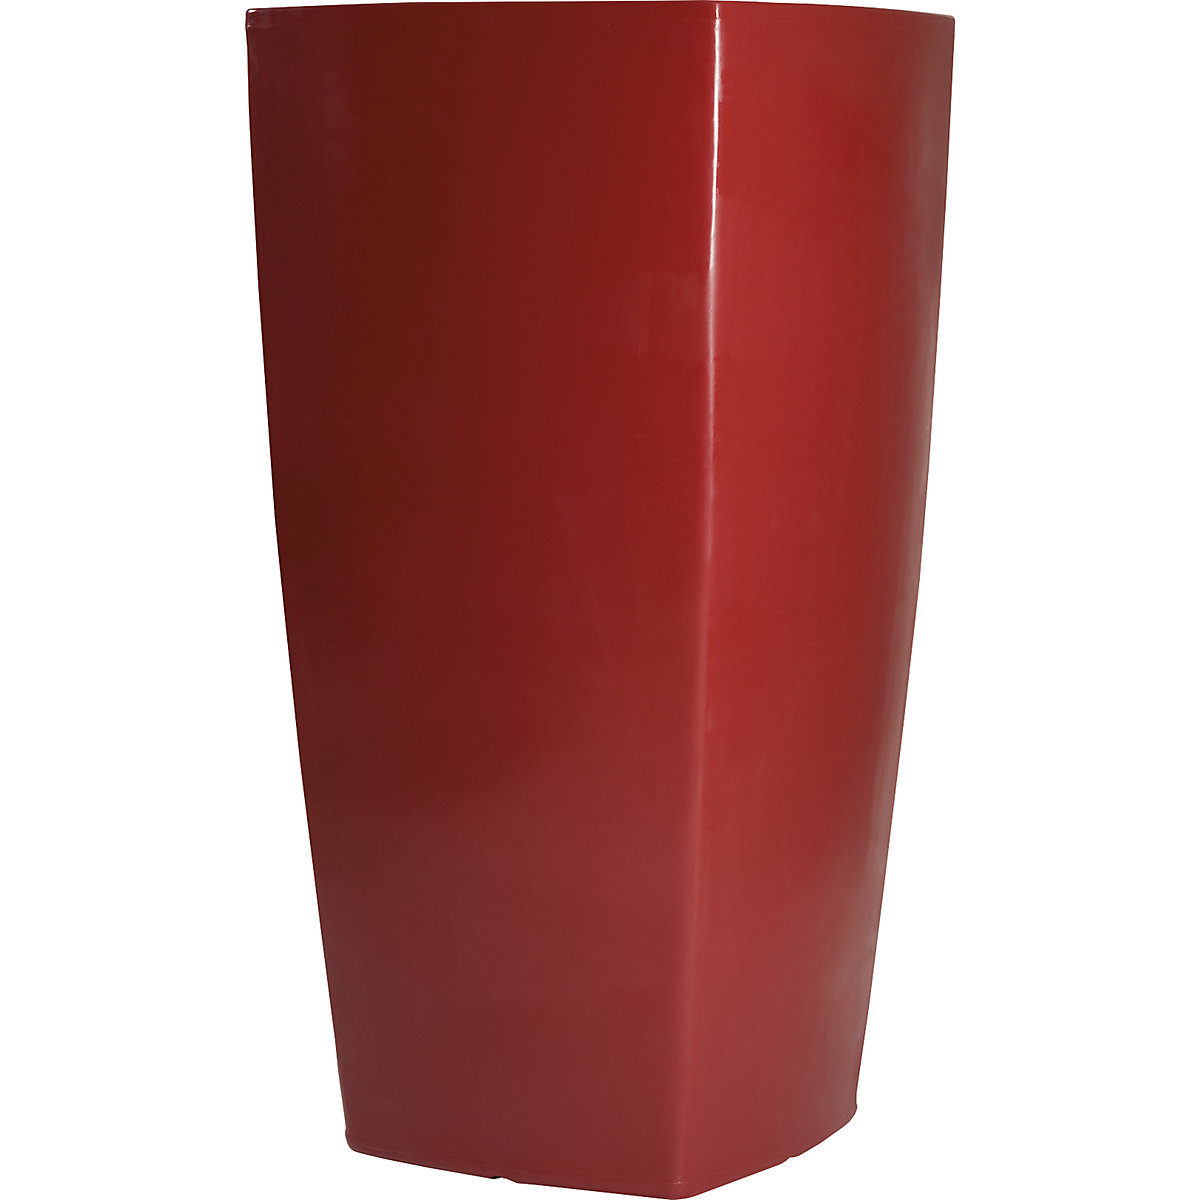 DEGARDO Pflanzbehälter, TREVIA III, HxBxT 1100 x 570 x 570 mm, rubinrot